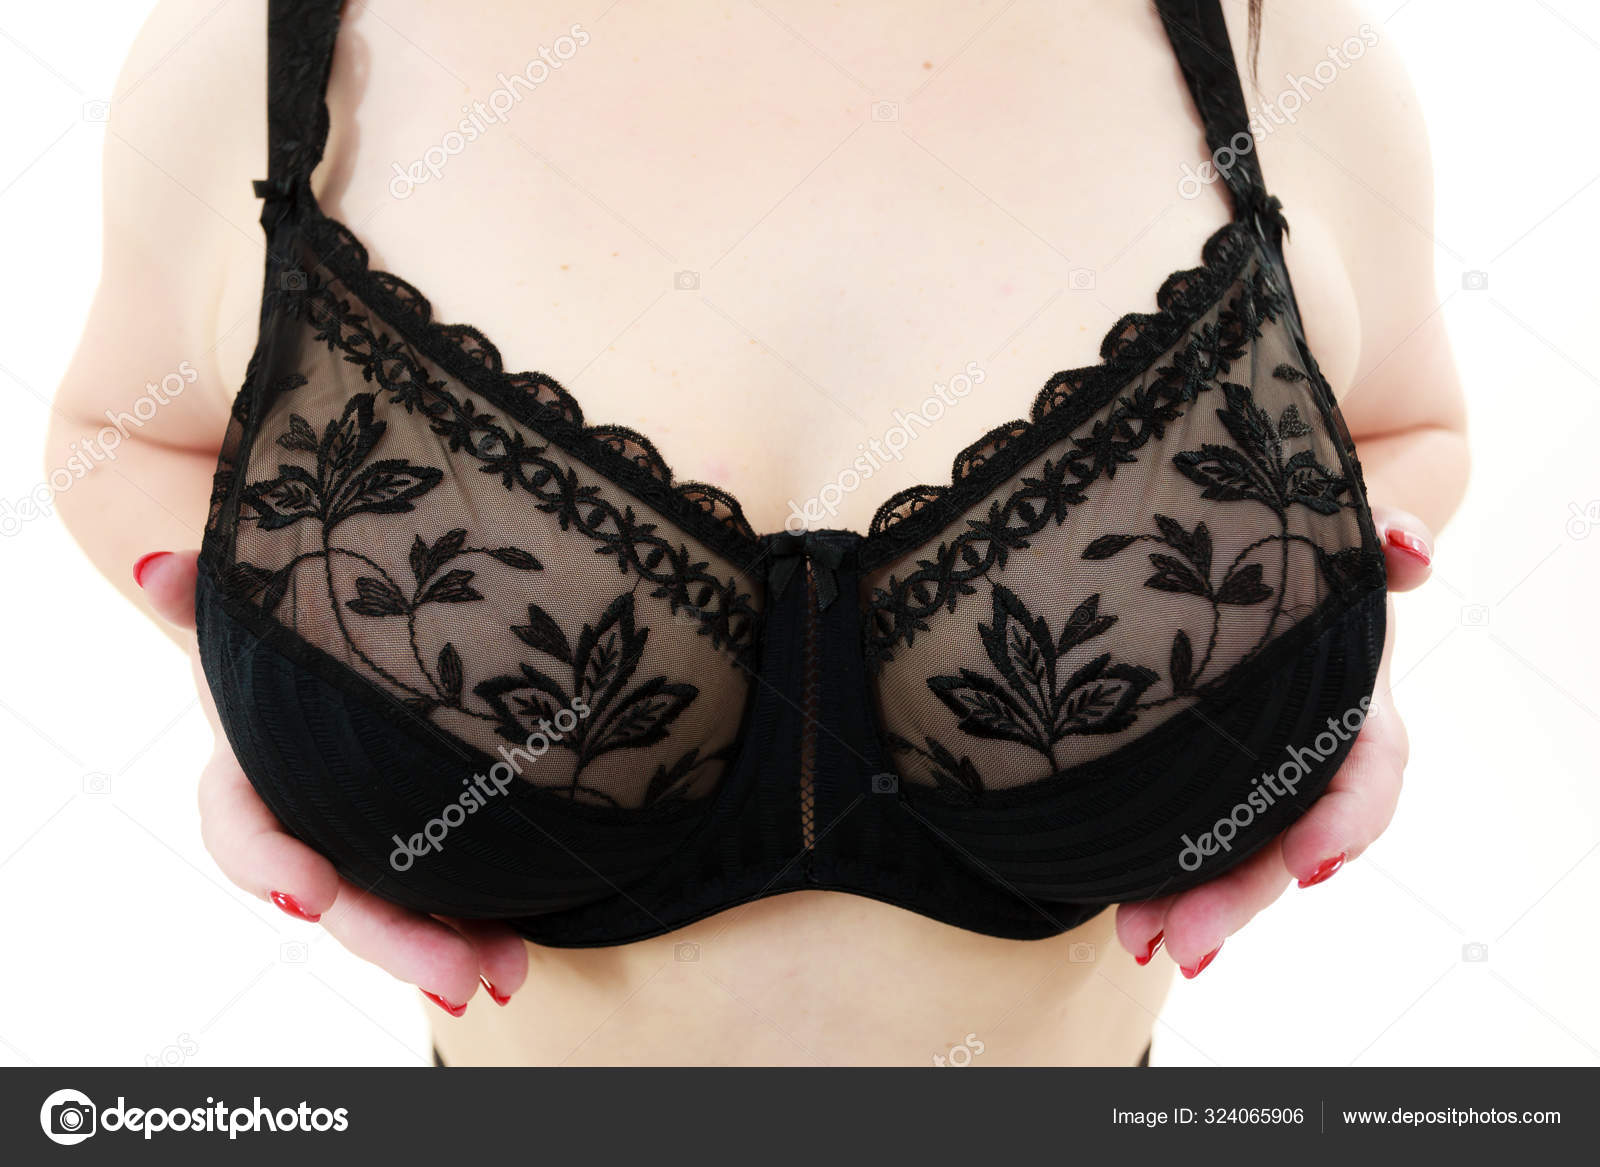 https://st3.depositphotos.com/1735158/32406/i/1600/depositphotos_324065906-stock-photo-woman-big-breast-wearing-bra.jpg